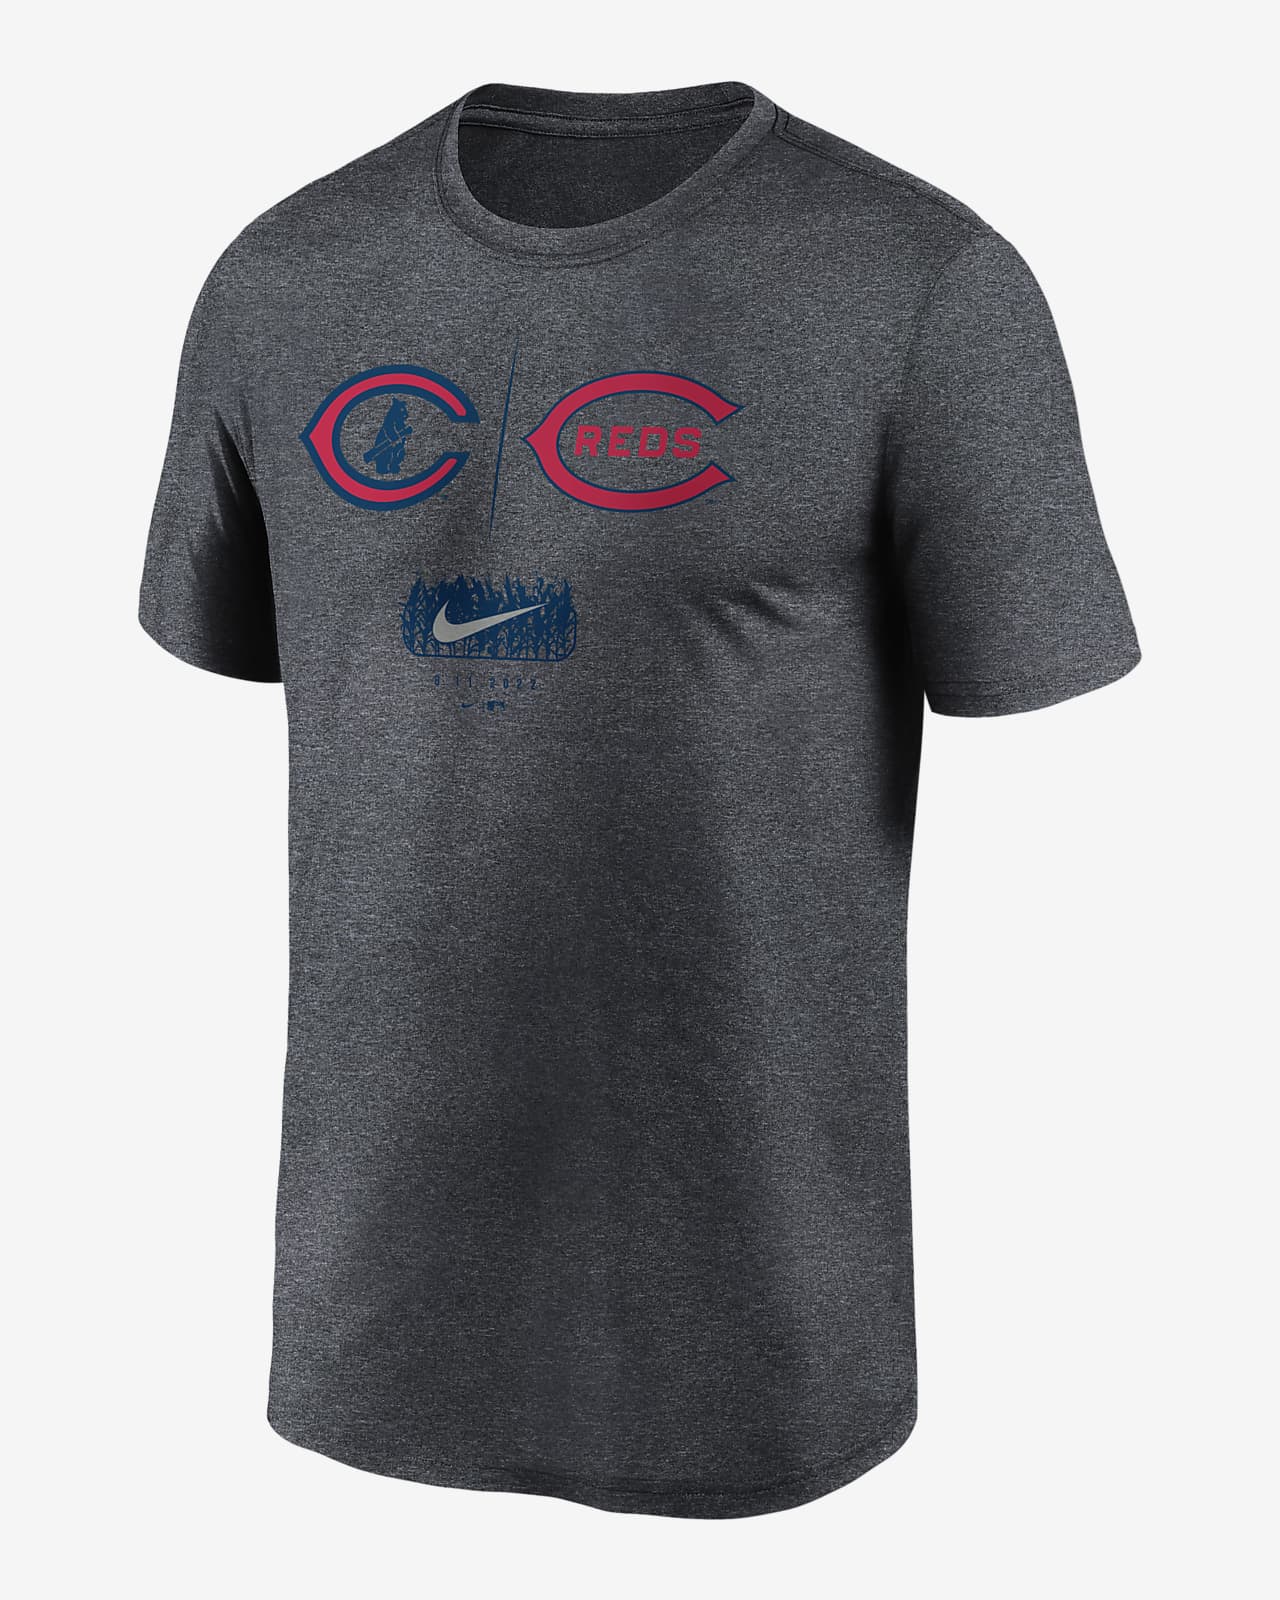 Nike Dri-FIT Iowa Collection Field of Dreams Destination Matchup (MLB)  Men's T-Shirt.